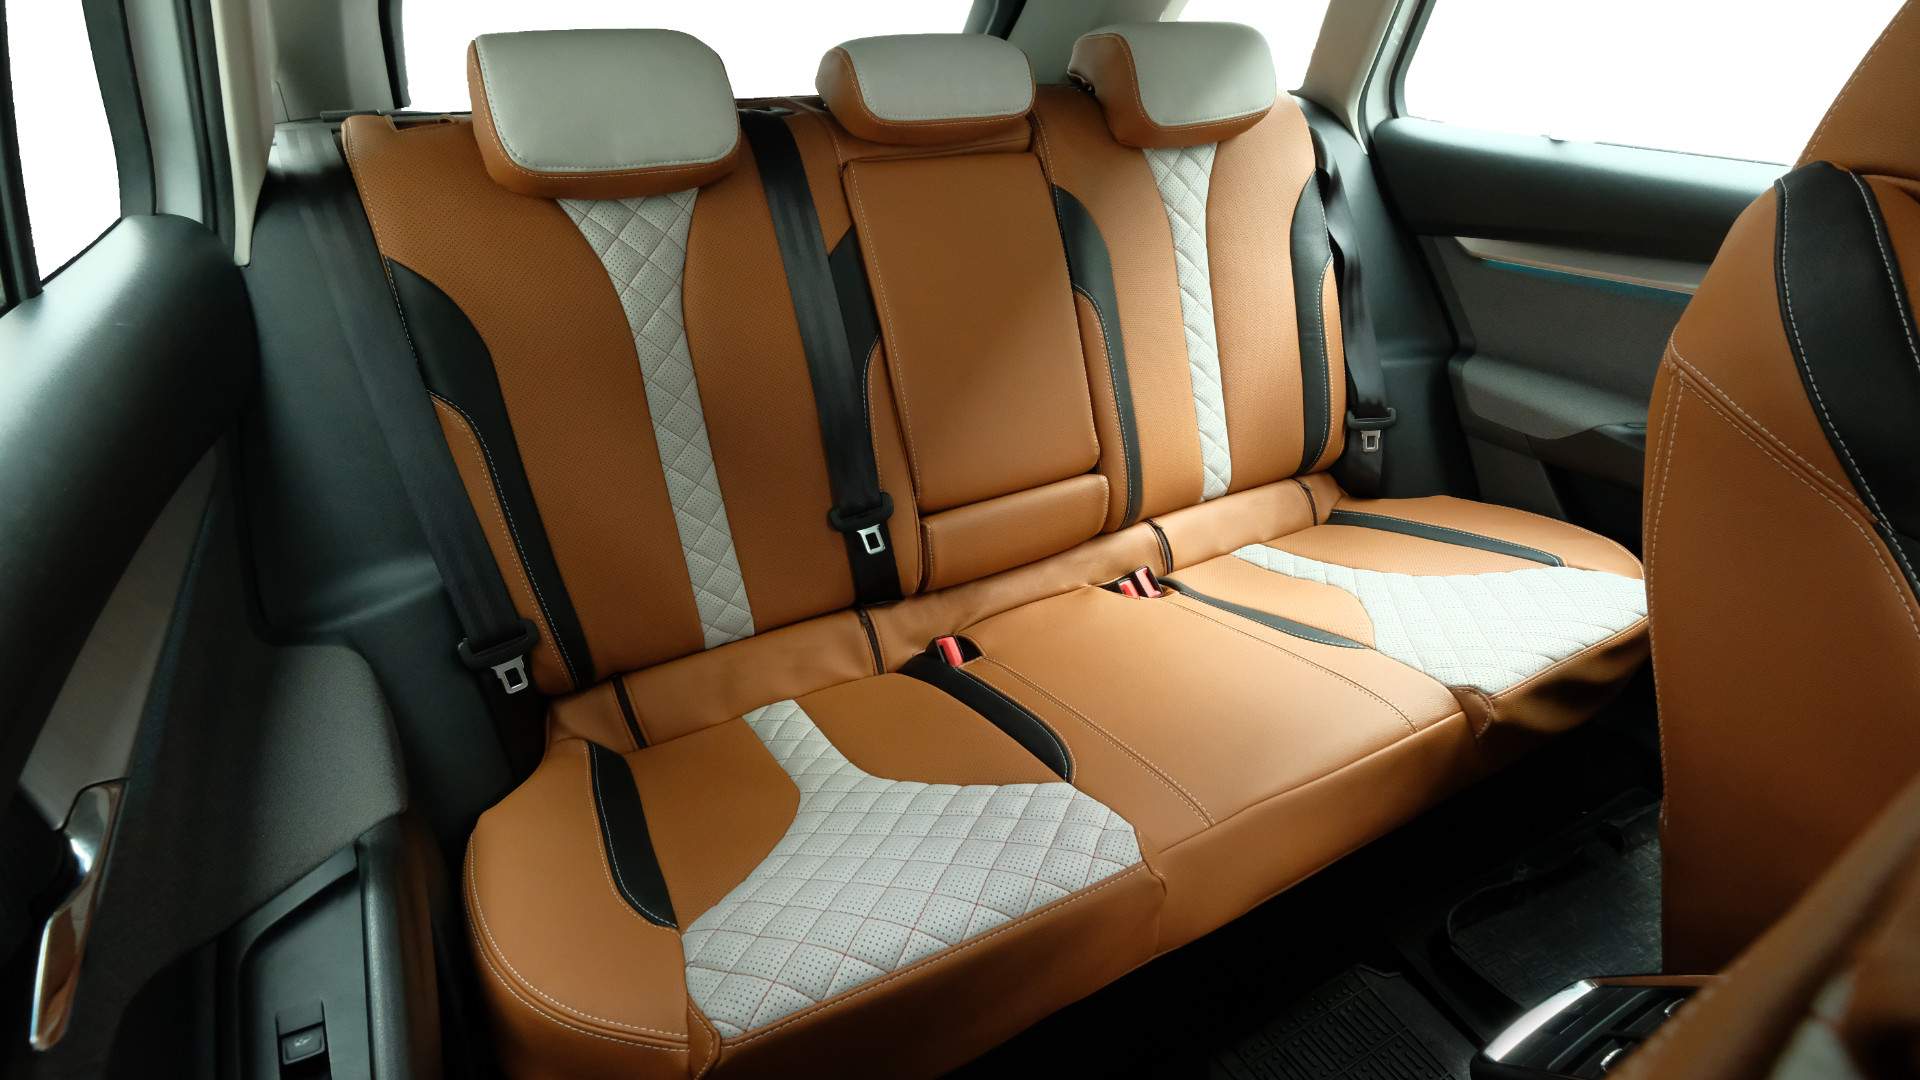 Car seat covers - Housse auto- Autositzbezuge - Huse auto - Coprisedili Auto